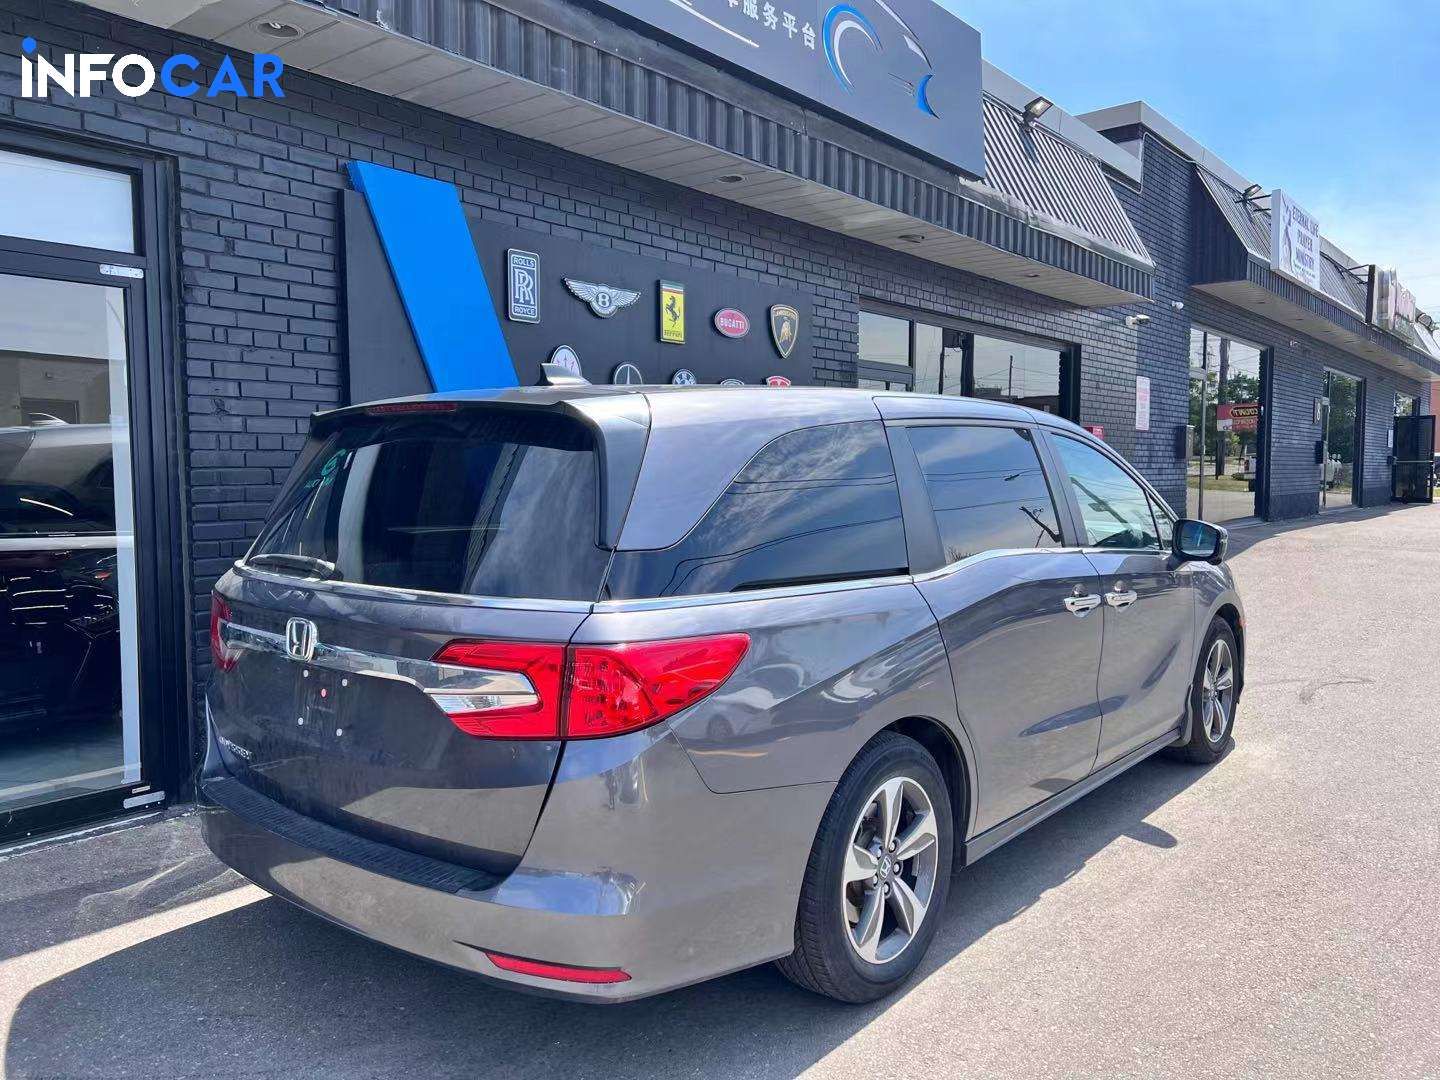 2019 Honda Odyssey EX - INFOCAR - Toronto Auto Trading Platform